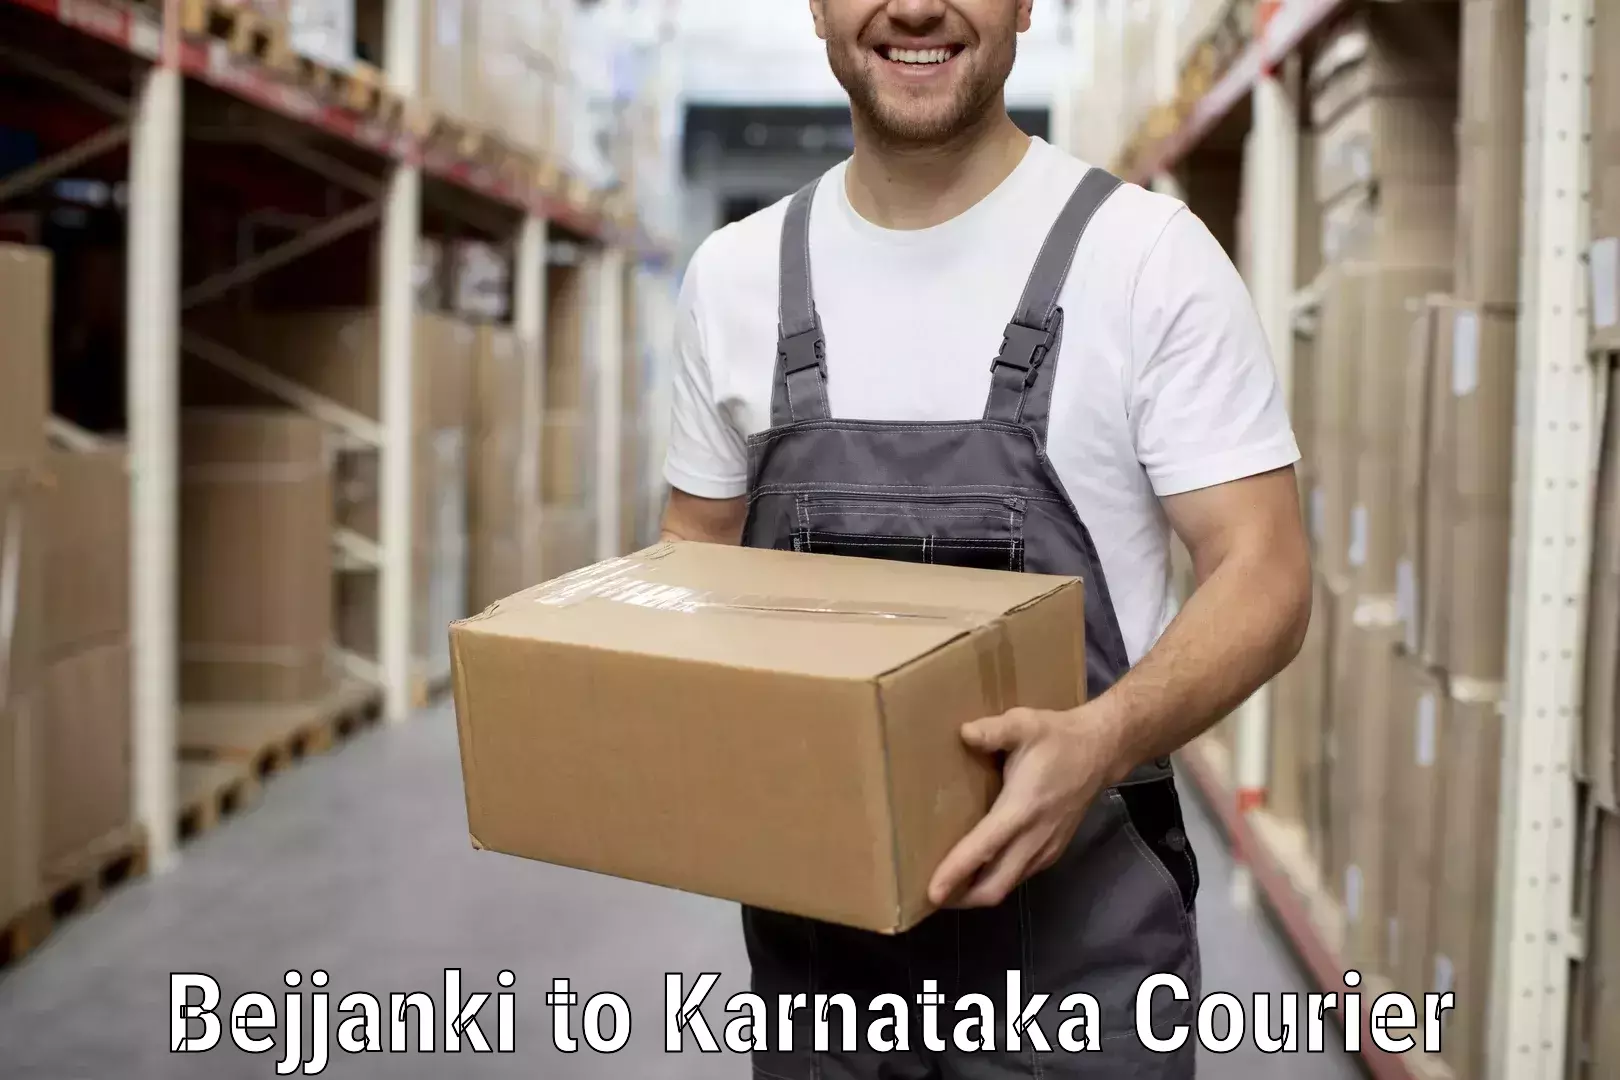 Professional moving company Bejjanki to Bengaluru